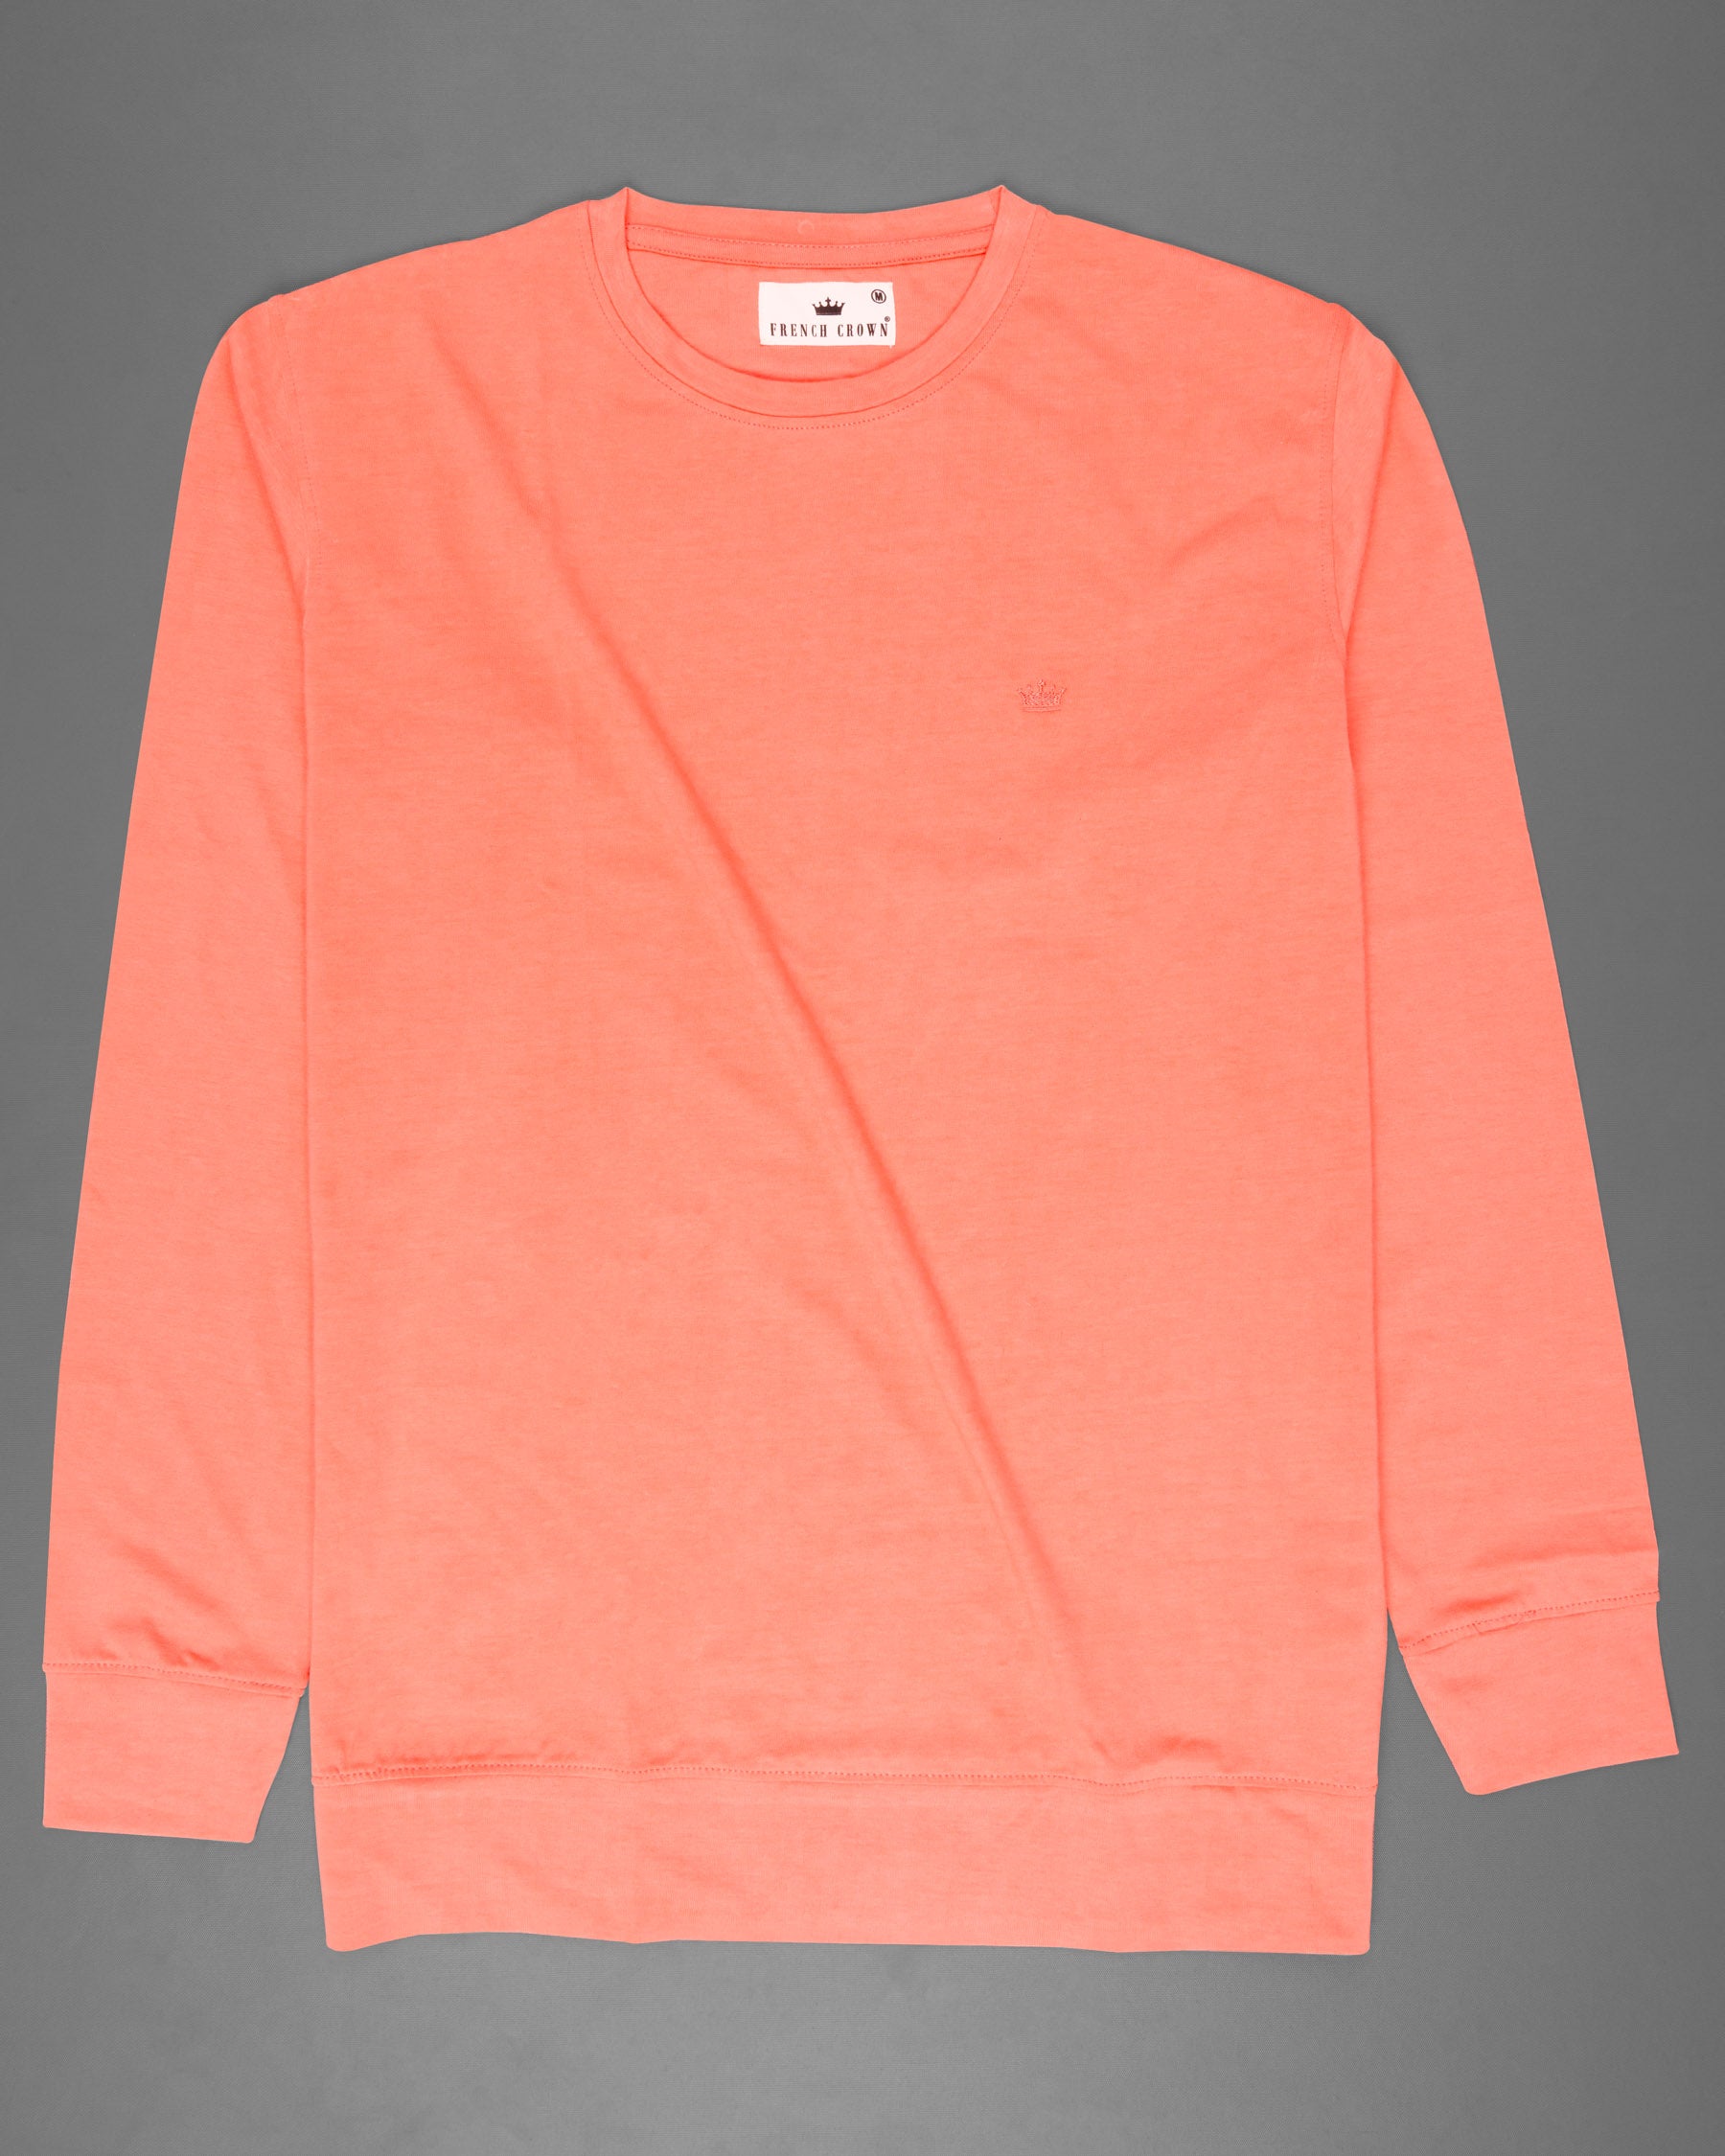 French Crown Salmon Full Sleeves Super Soft Premium Round Neck Sweatshirt For Men., XL